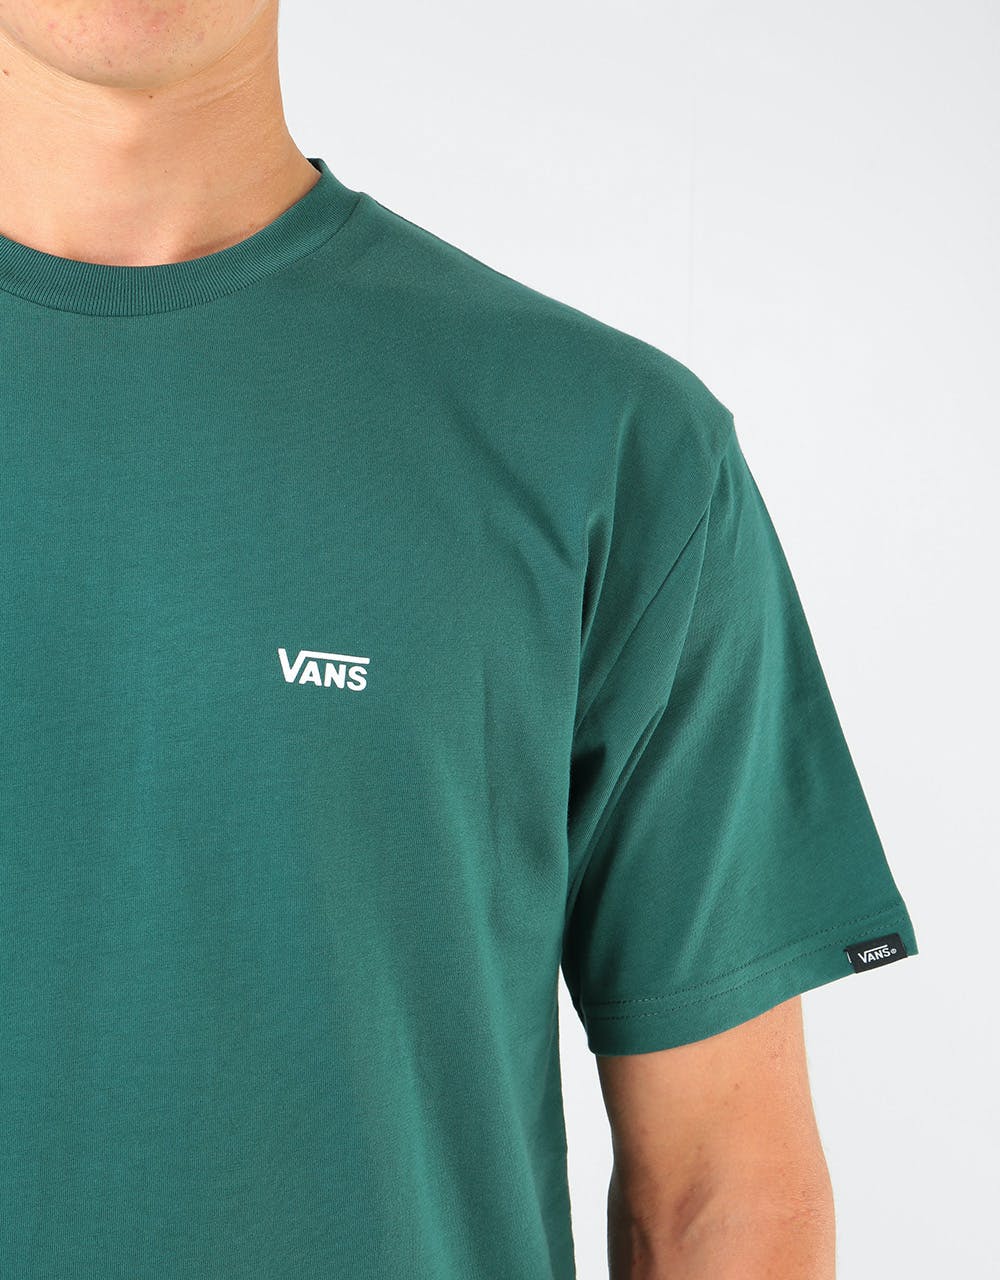 Vans Left Chest Logo T-Shirt - Vans Trekking Green